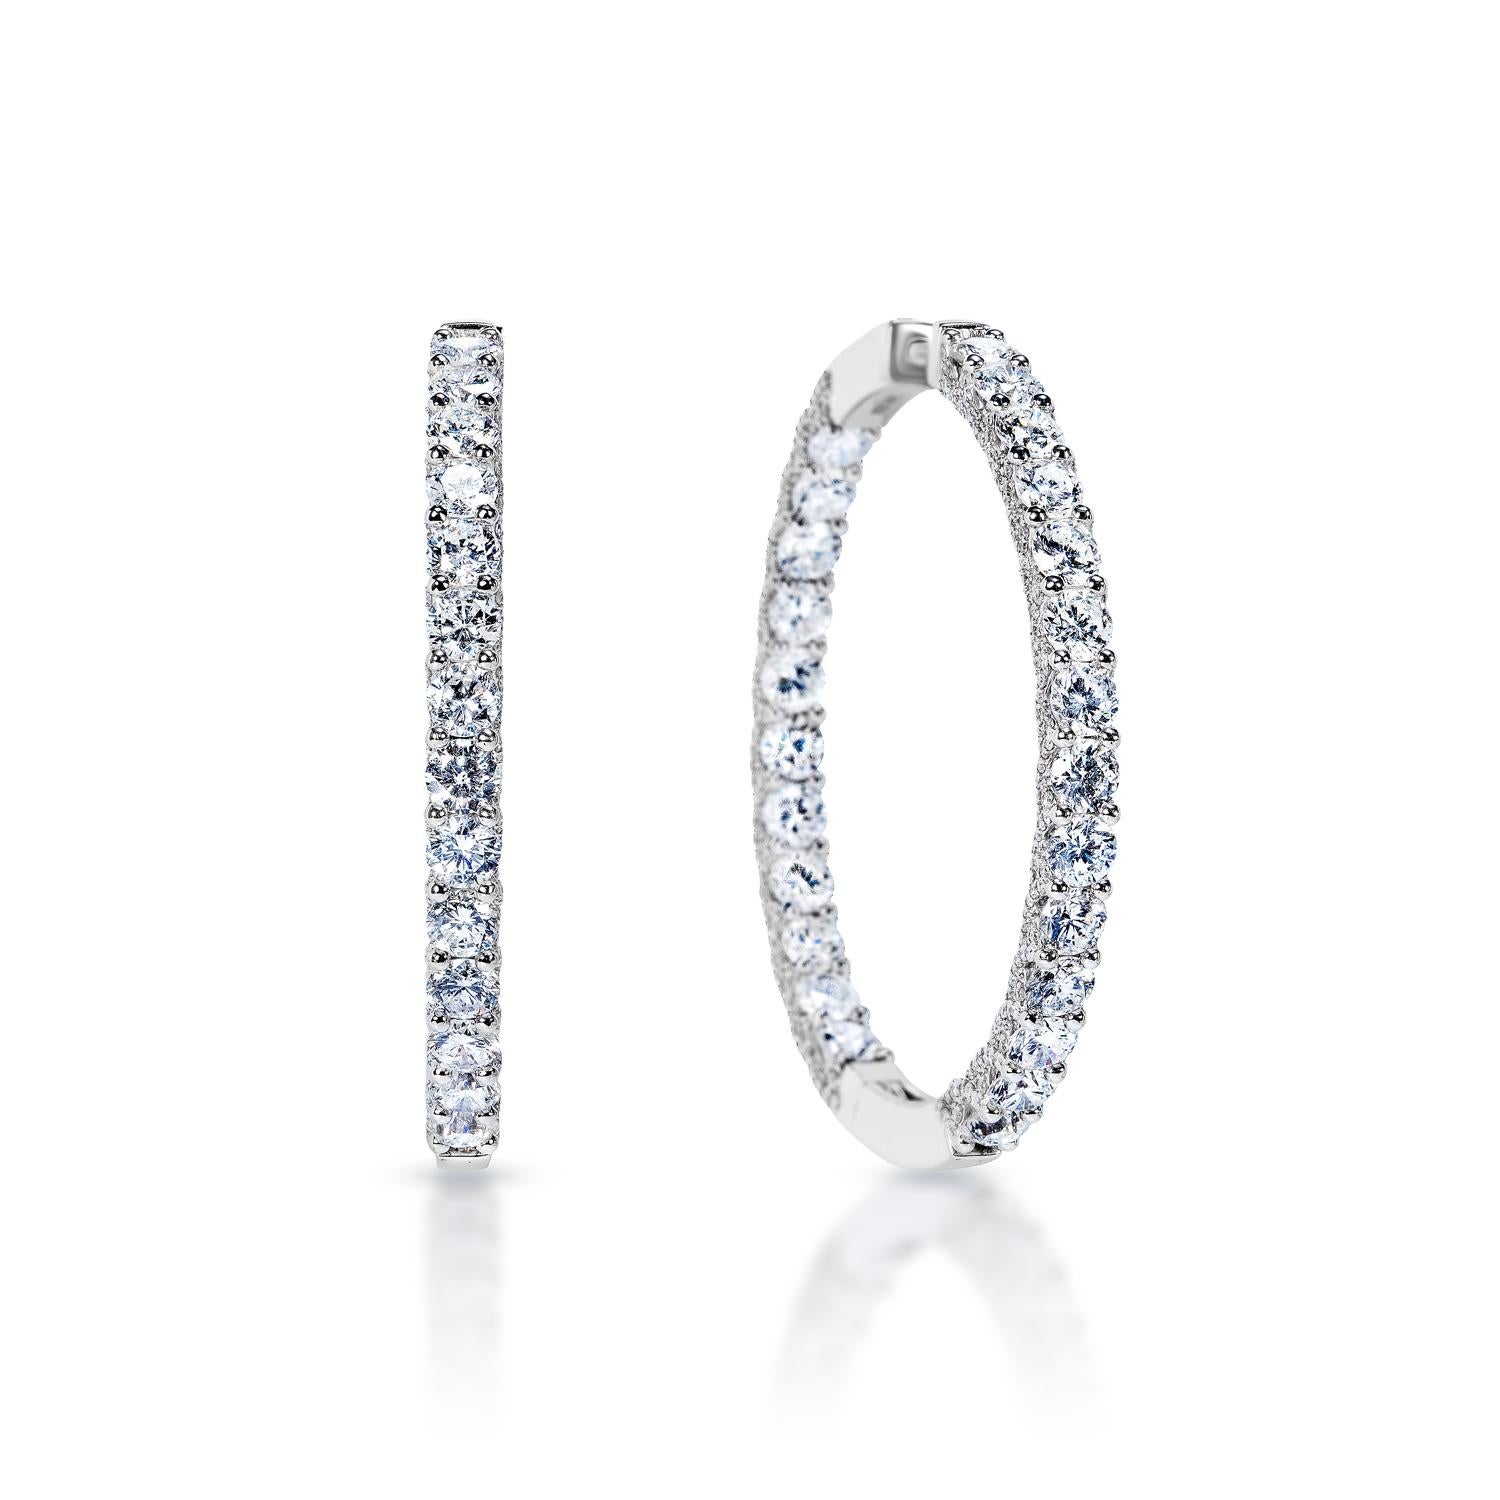 Diamond Hoop Earrings:

Carat Weight: 13.19 Carats
Shape: Round Brilliant Cut
Metal: 14 Karat White Gold
Style: Hoop Earrings